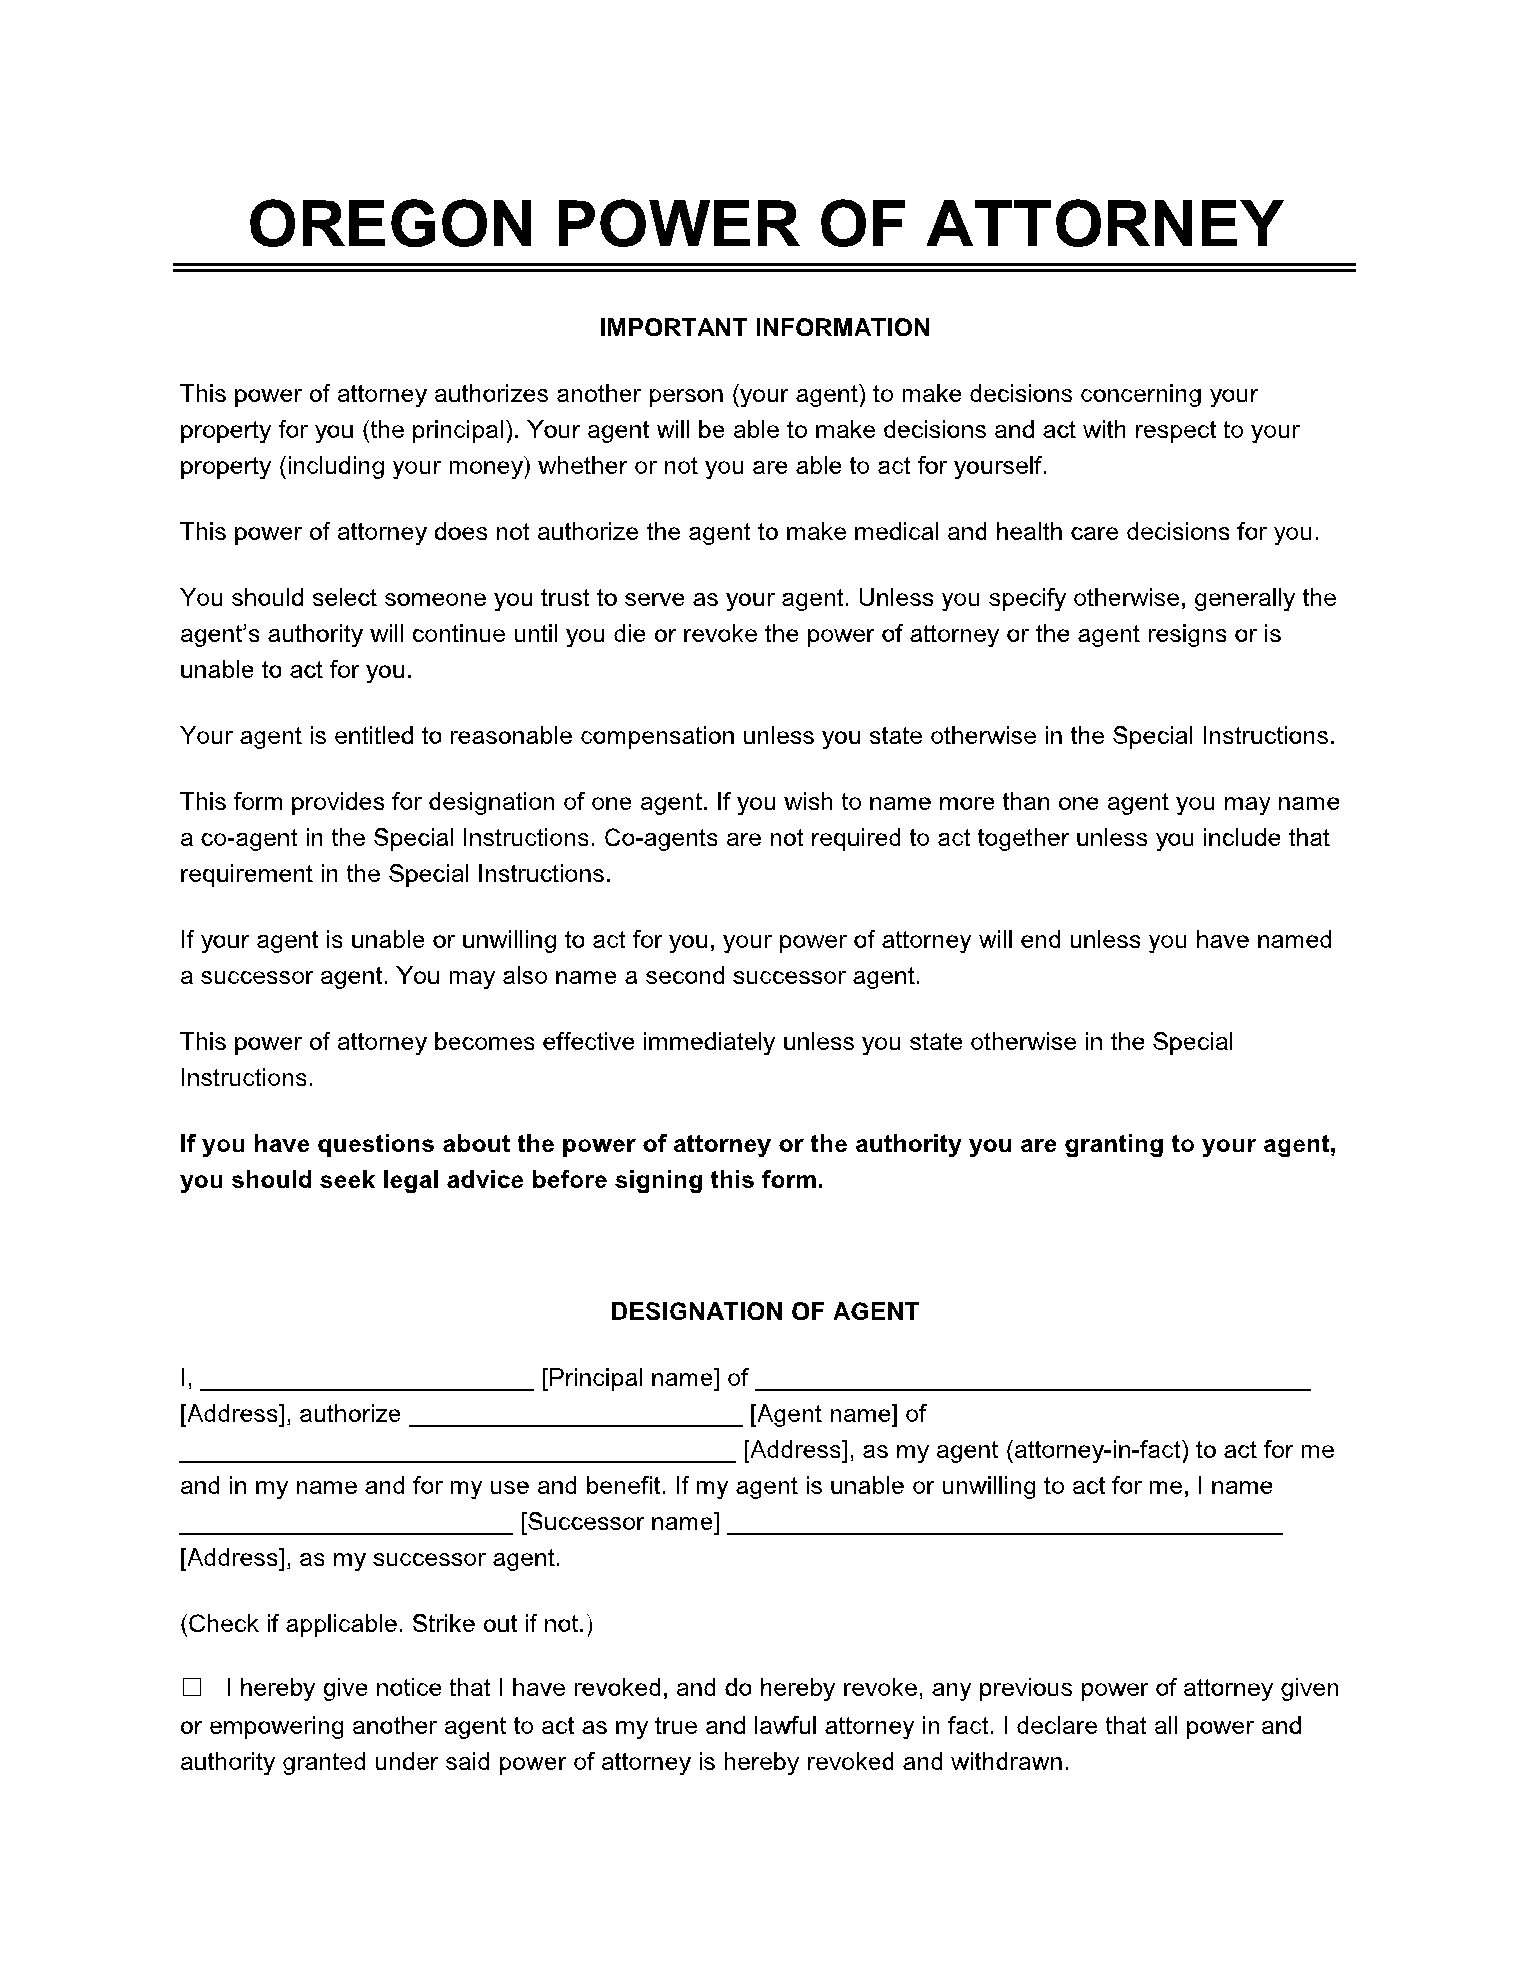 Oregon Power of Attorney Form